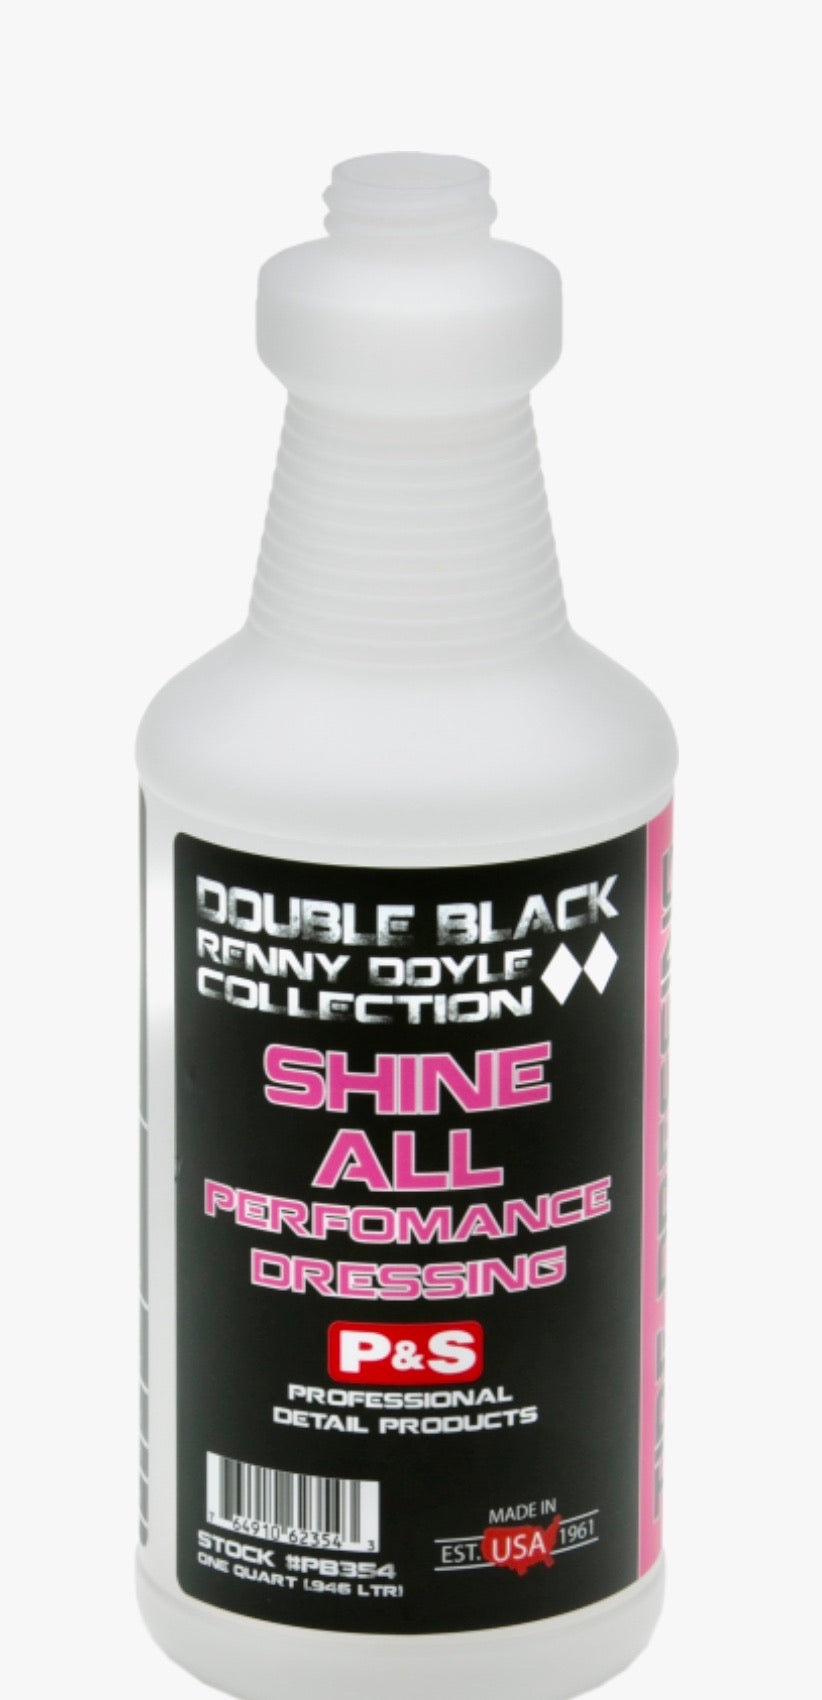 Shine All Performance Dressing 32 oz Safety Bottle